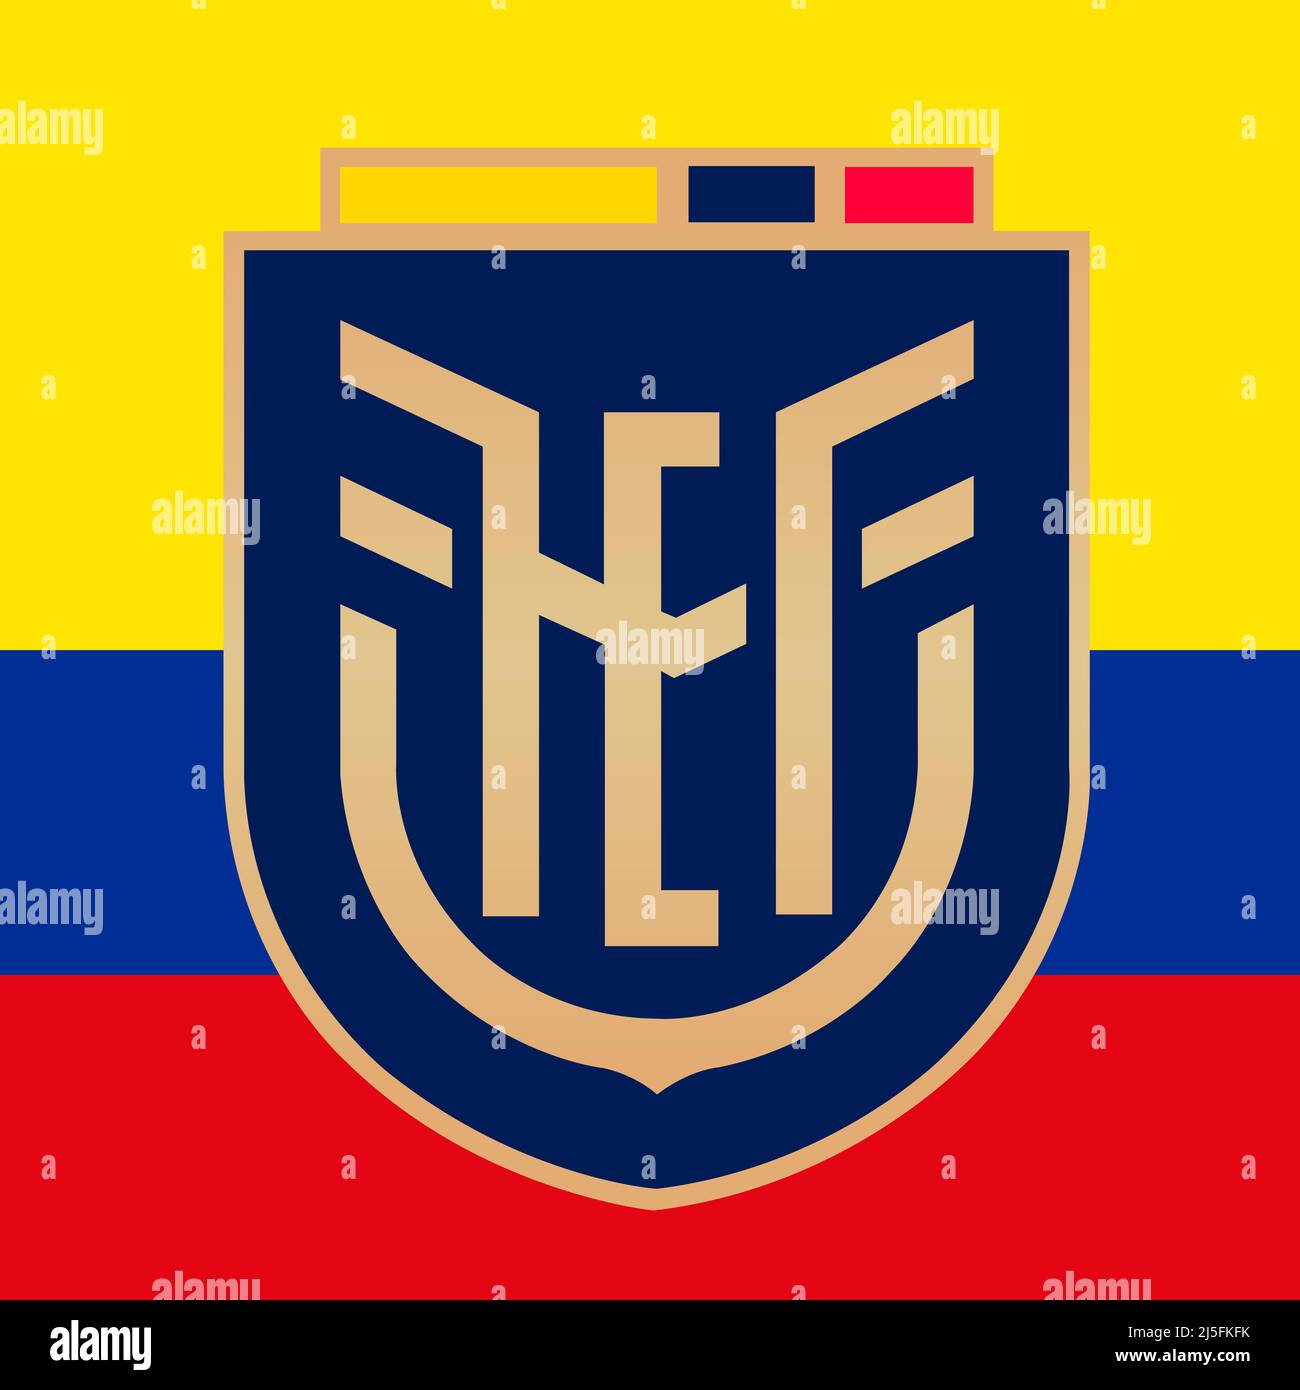 Ecuador football federation logo with national flag, FIFA World Cup 2022, illustration Stock Photo